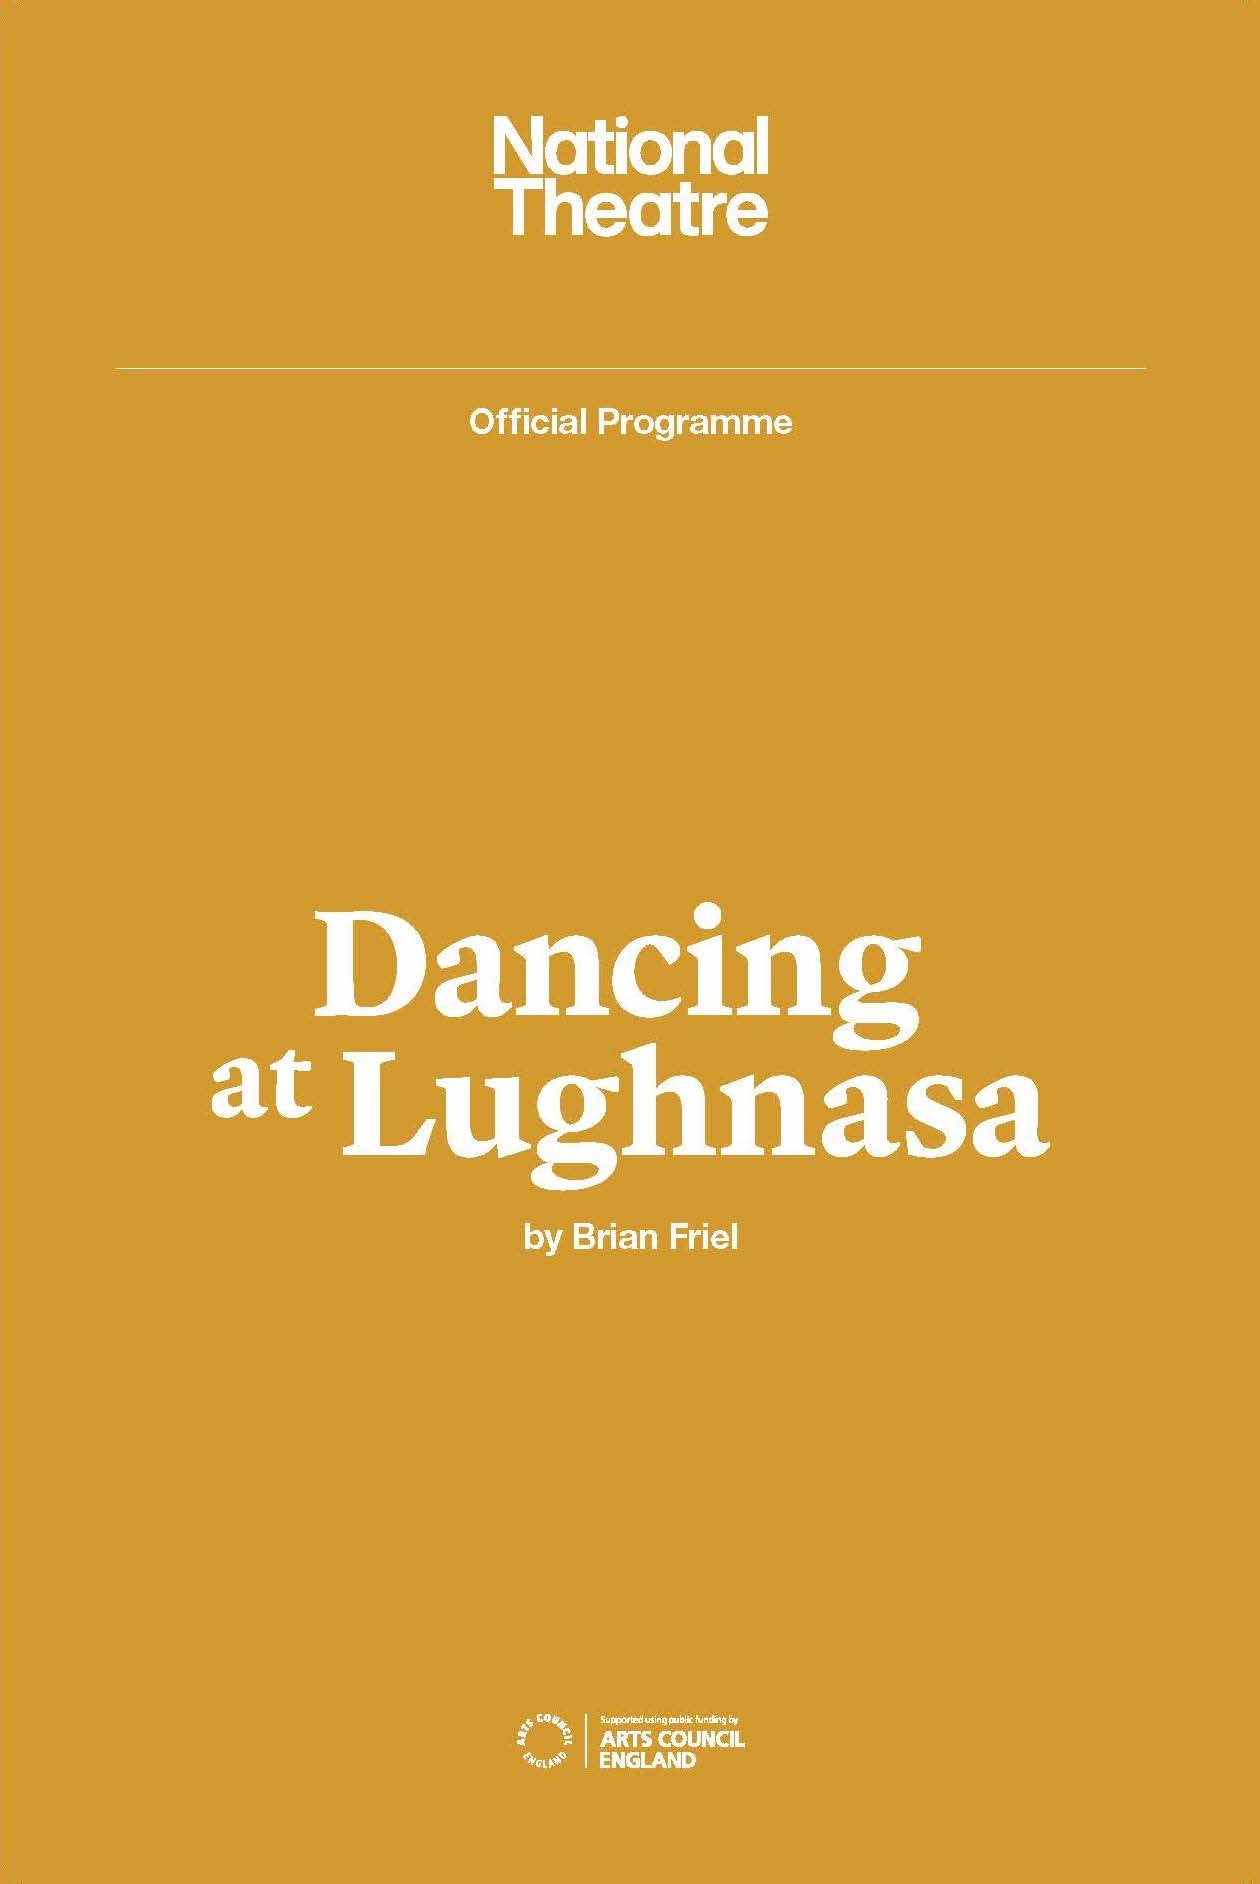 Dancing at Lughnasa Programme